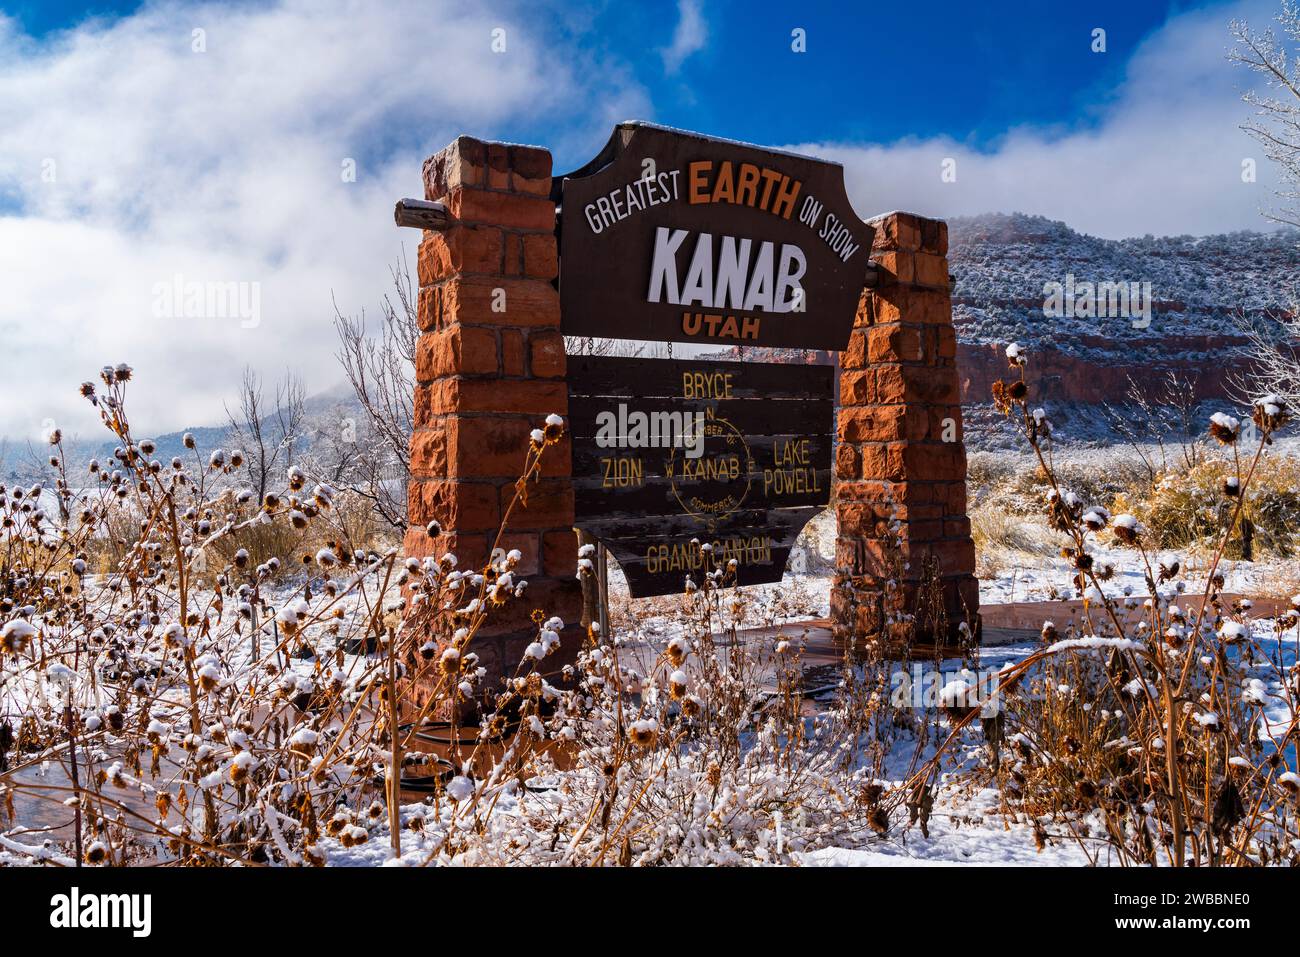 Kanab City sign with cloud covering the mountain: Kanab, Utah Stock Photo